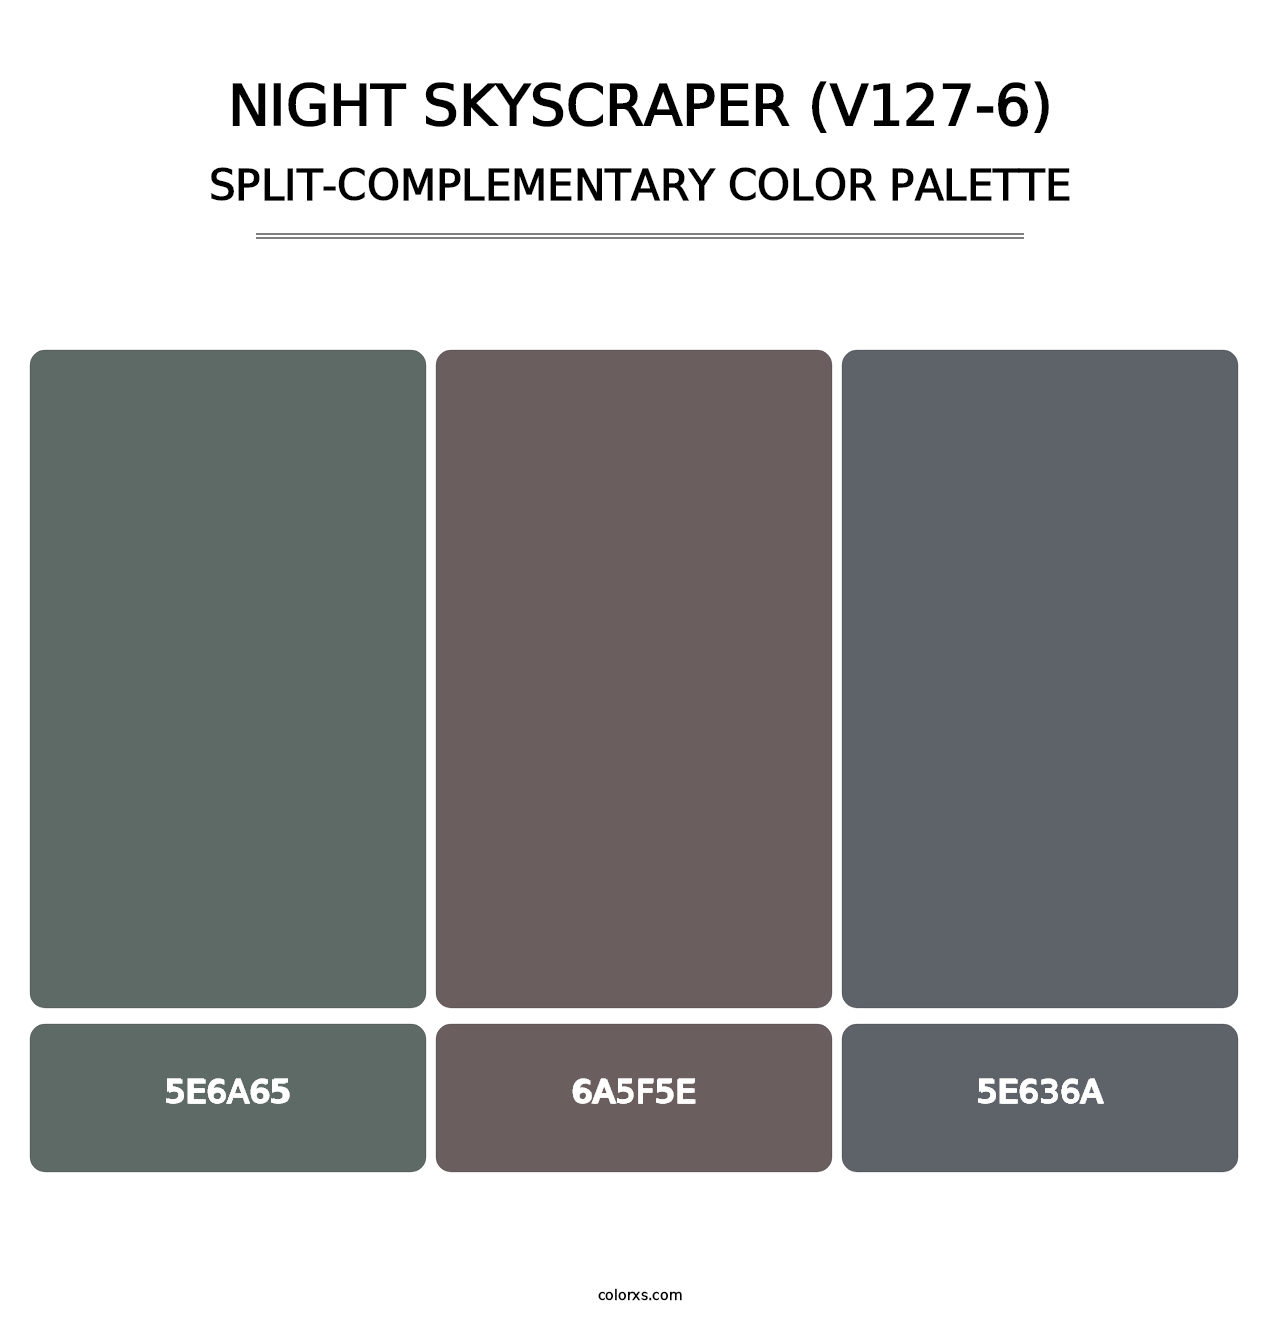 Night Skyscraper (V127-6) - Split-Complementary Color Palette